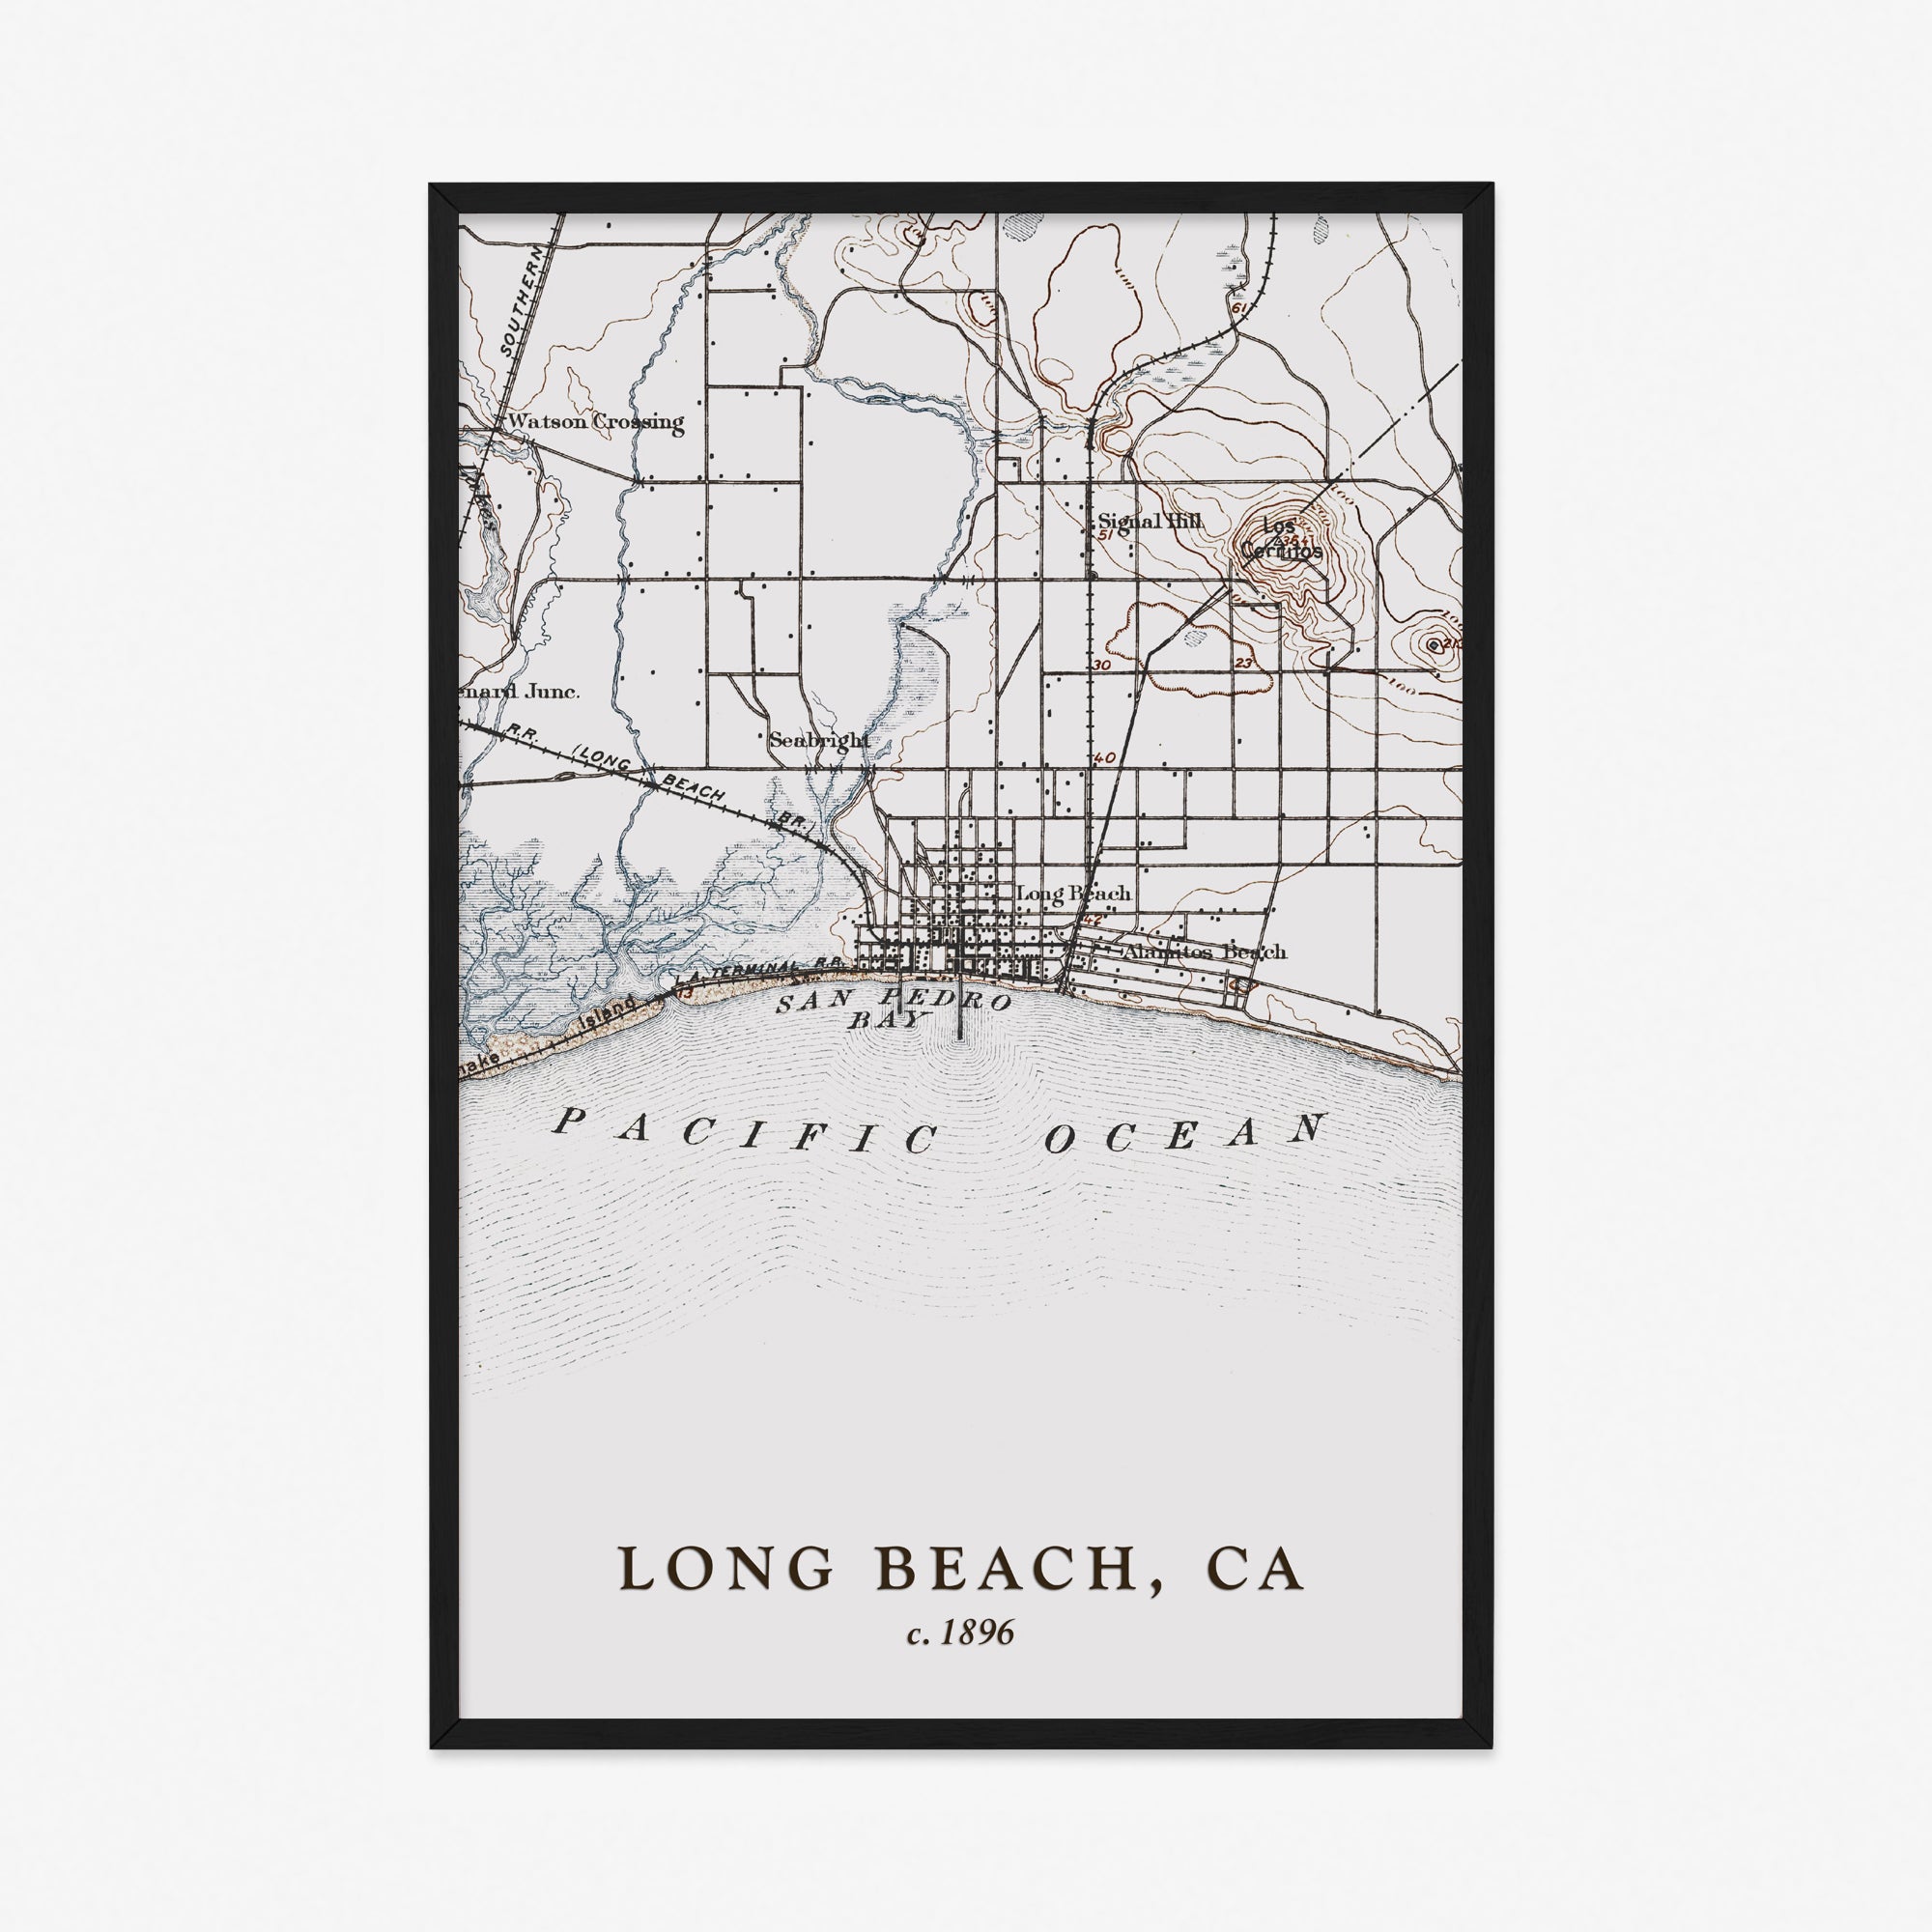 Long Beach, CA - 1896 Topographic Map